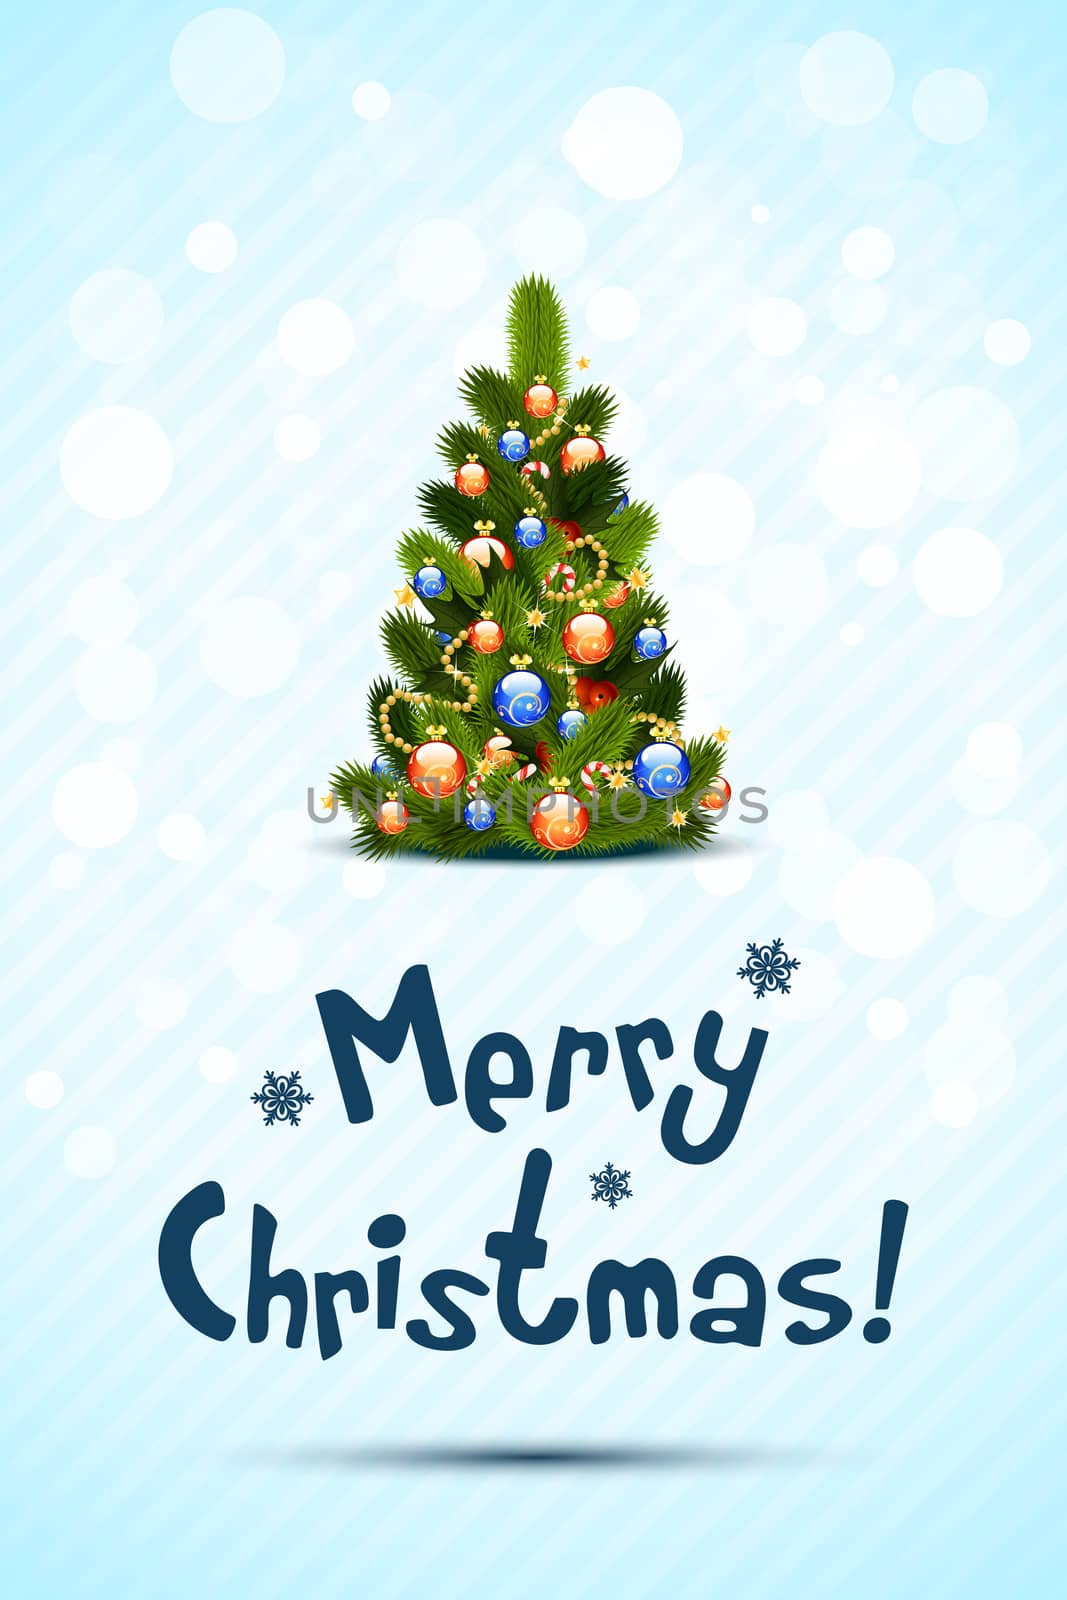 Merry Christmas Greeting Card with Christmas Tree